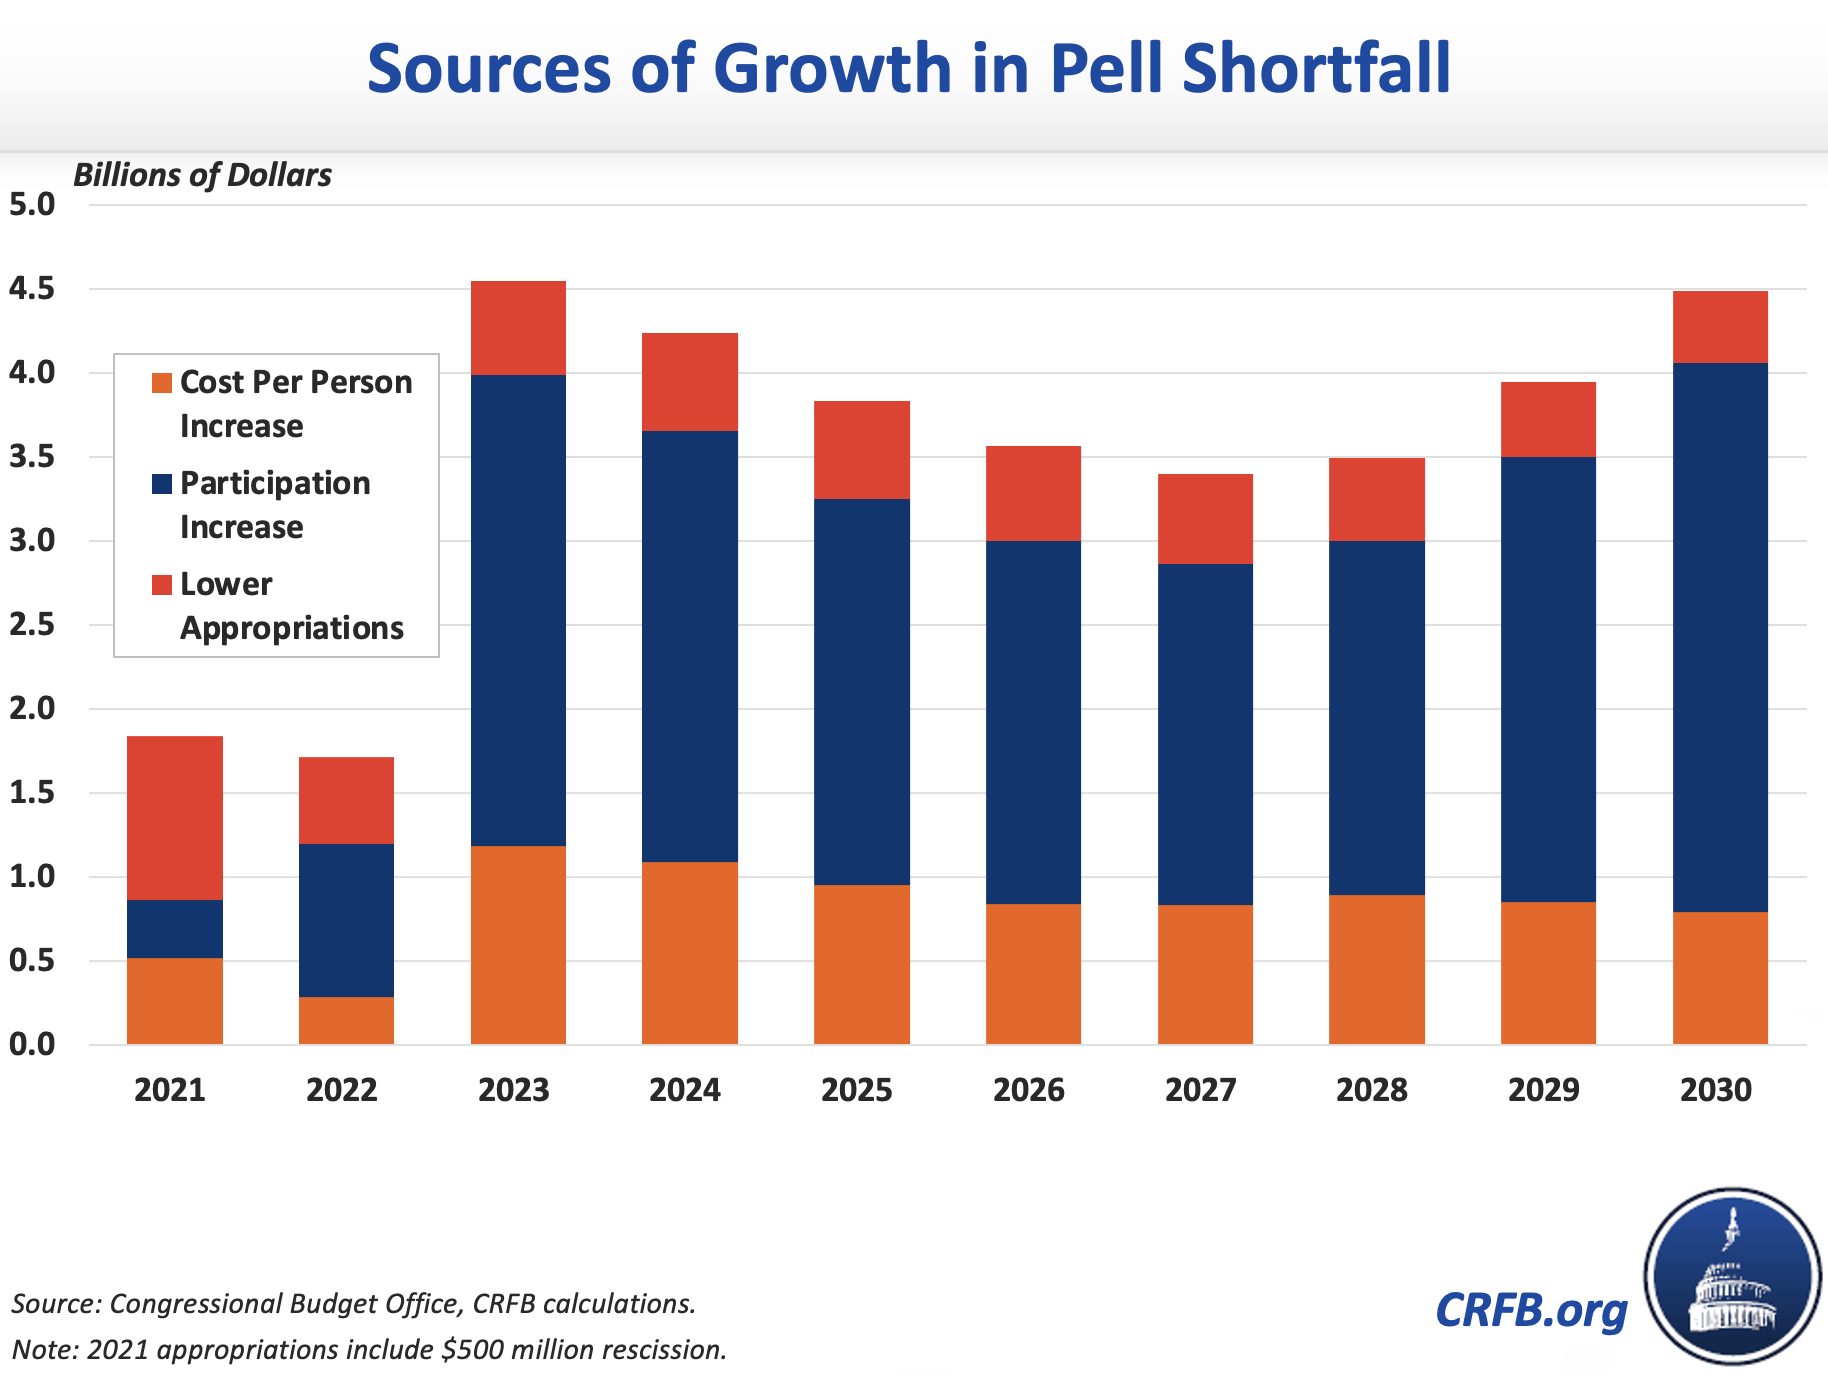 Pell Program Faces Funding Cliff in 202620210218